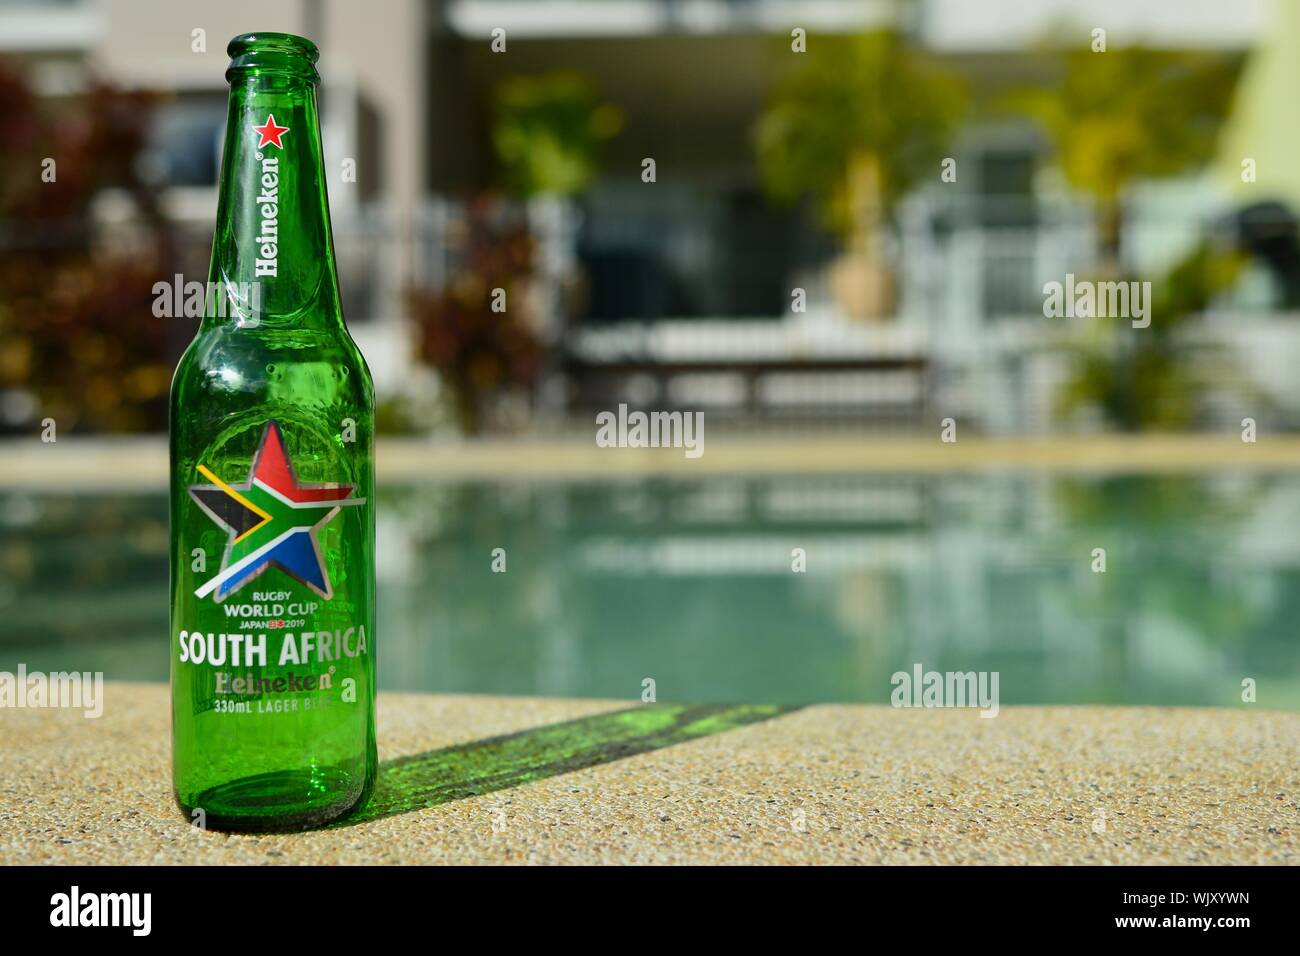 South africa, Heineken 2019 Japan Rugby world cup beer bottles Stock Photo